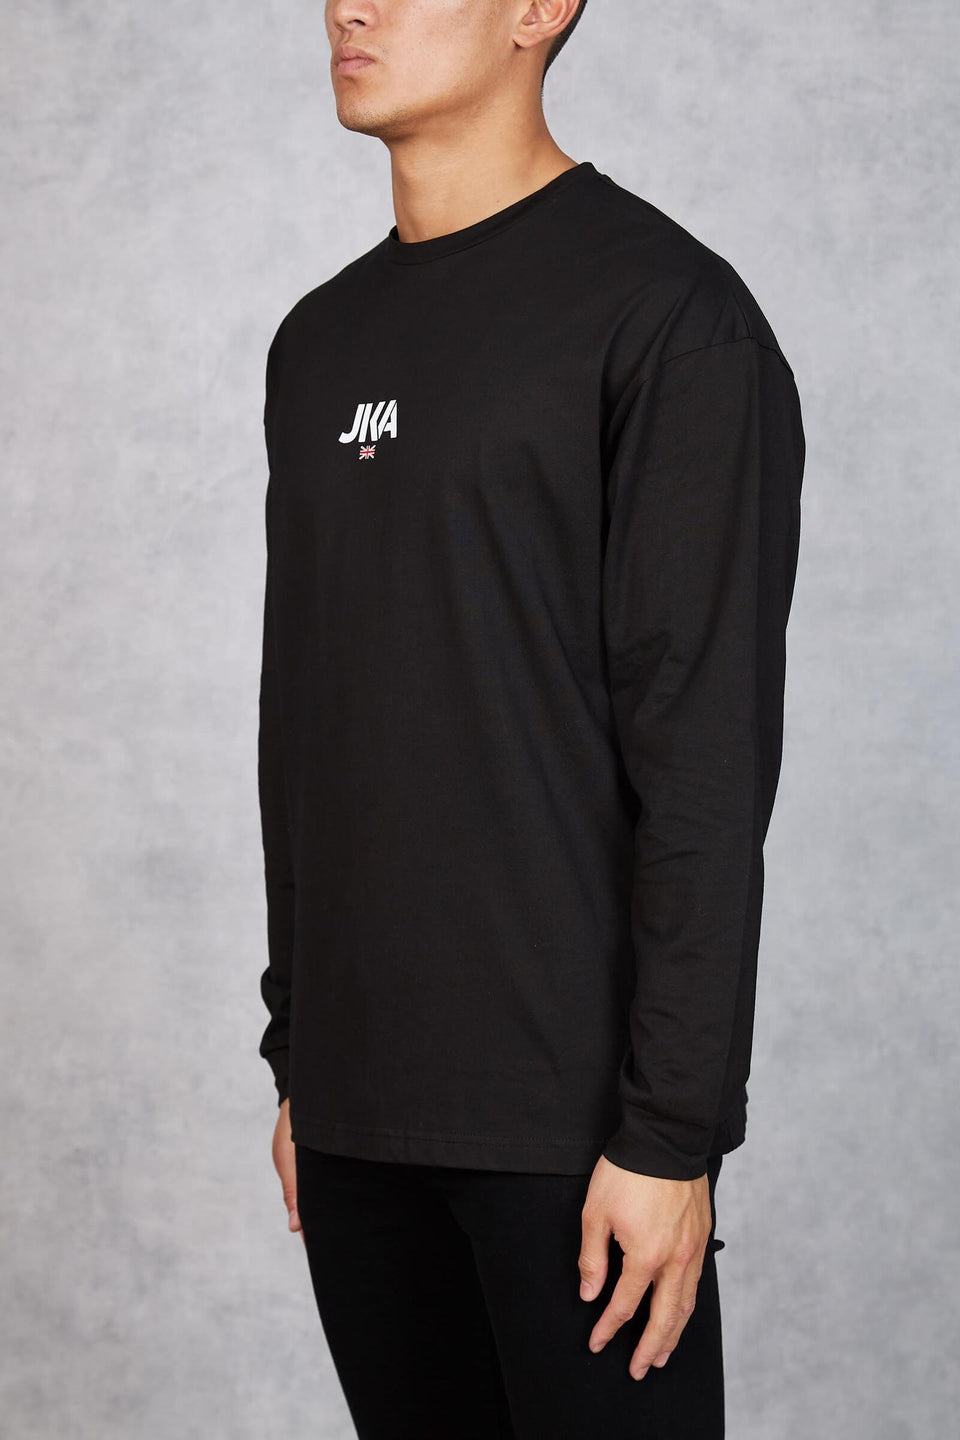 JKA British Lightweight Sweatshirt - Black